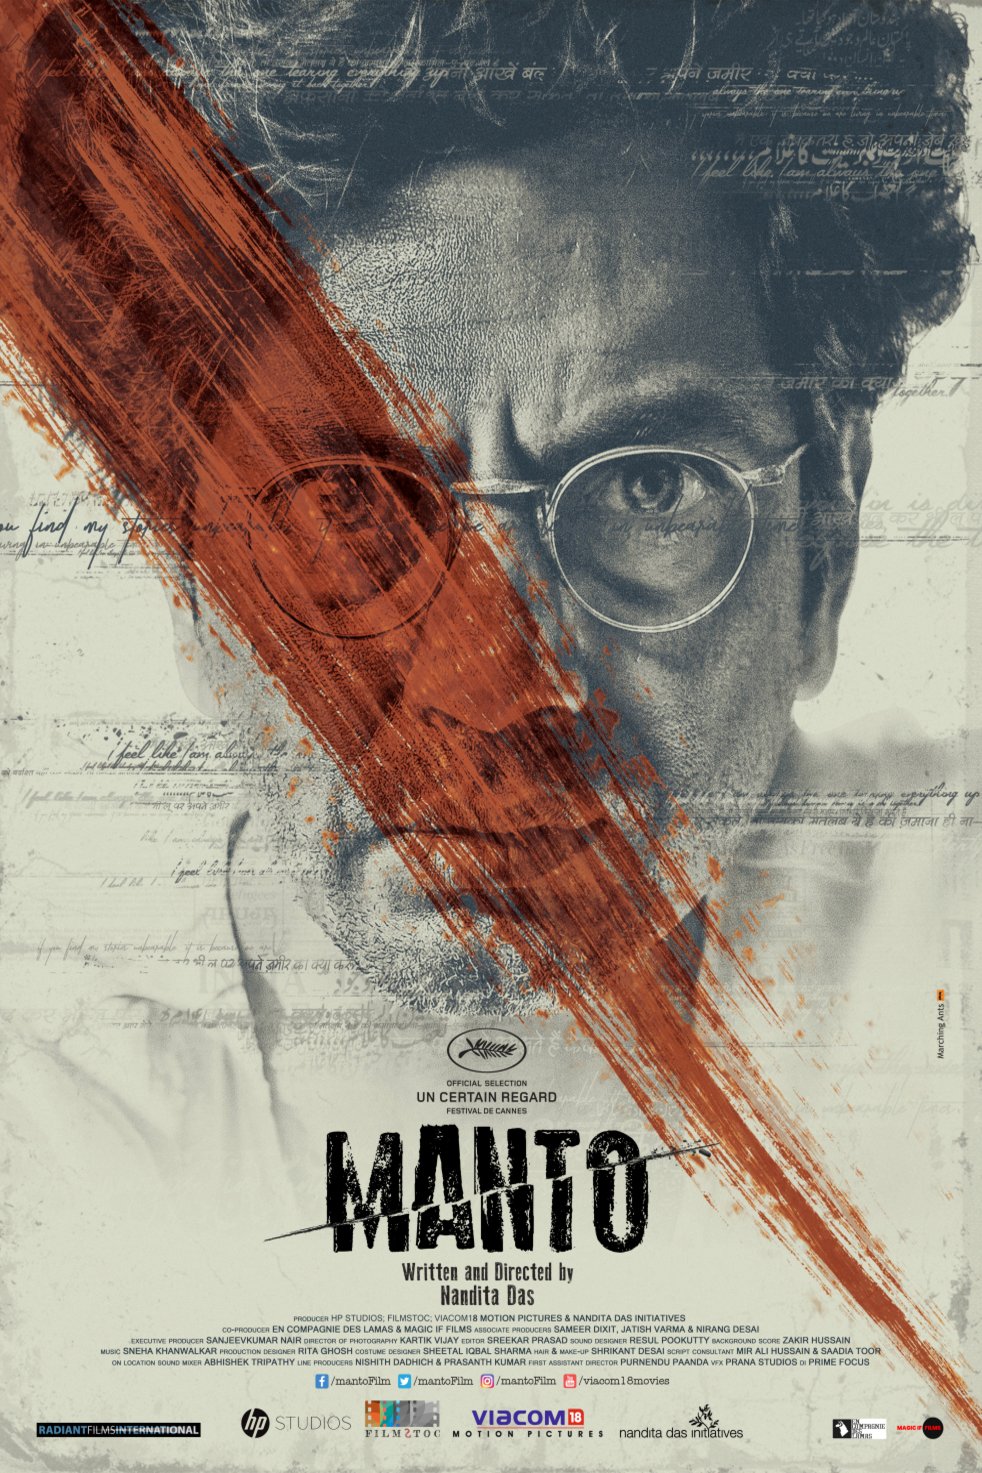 Hindi poster of the movie Manto